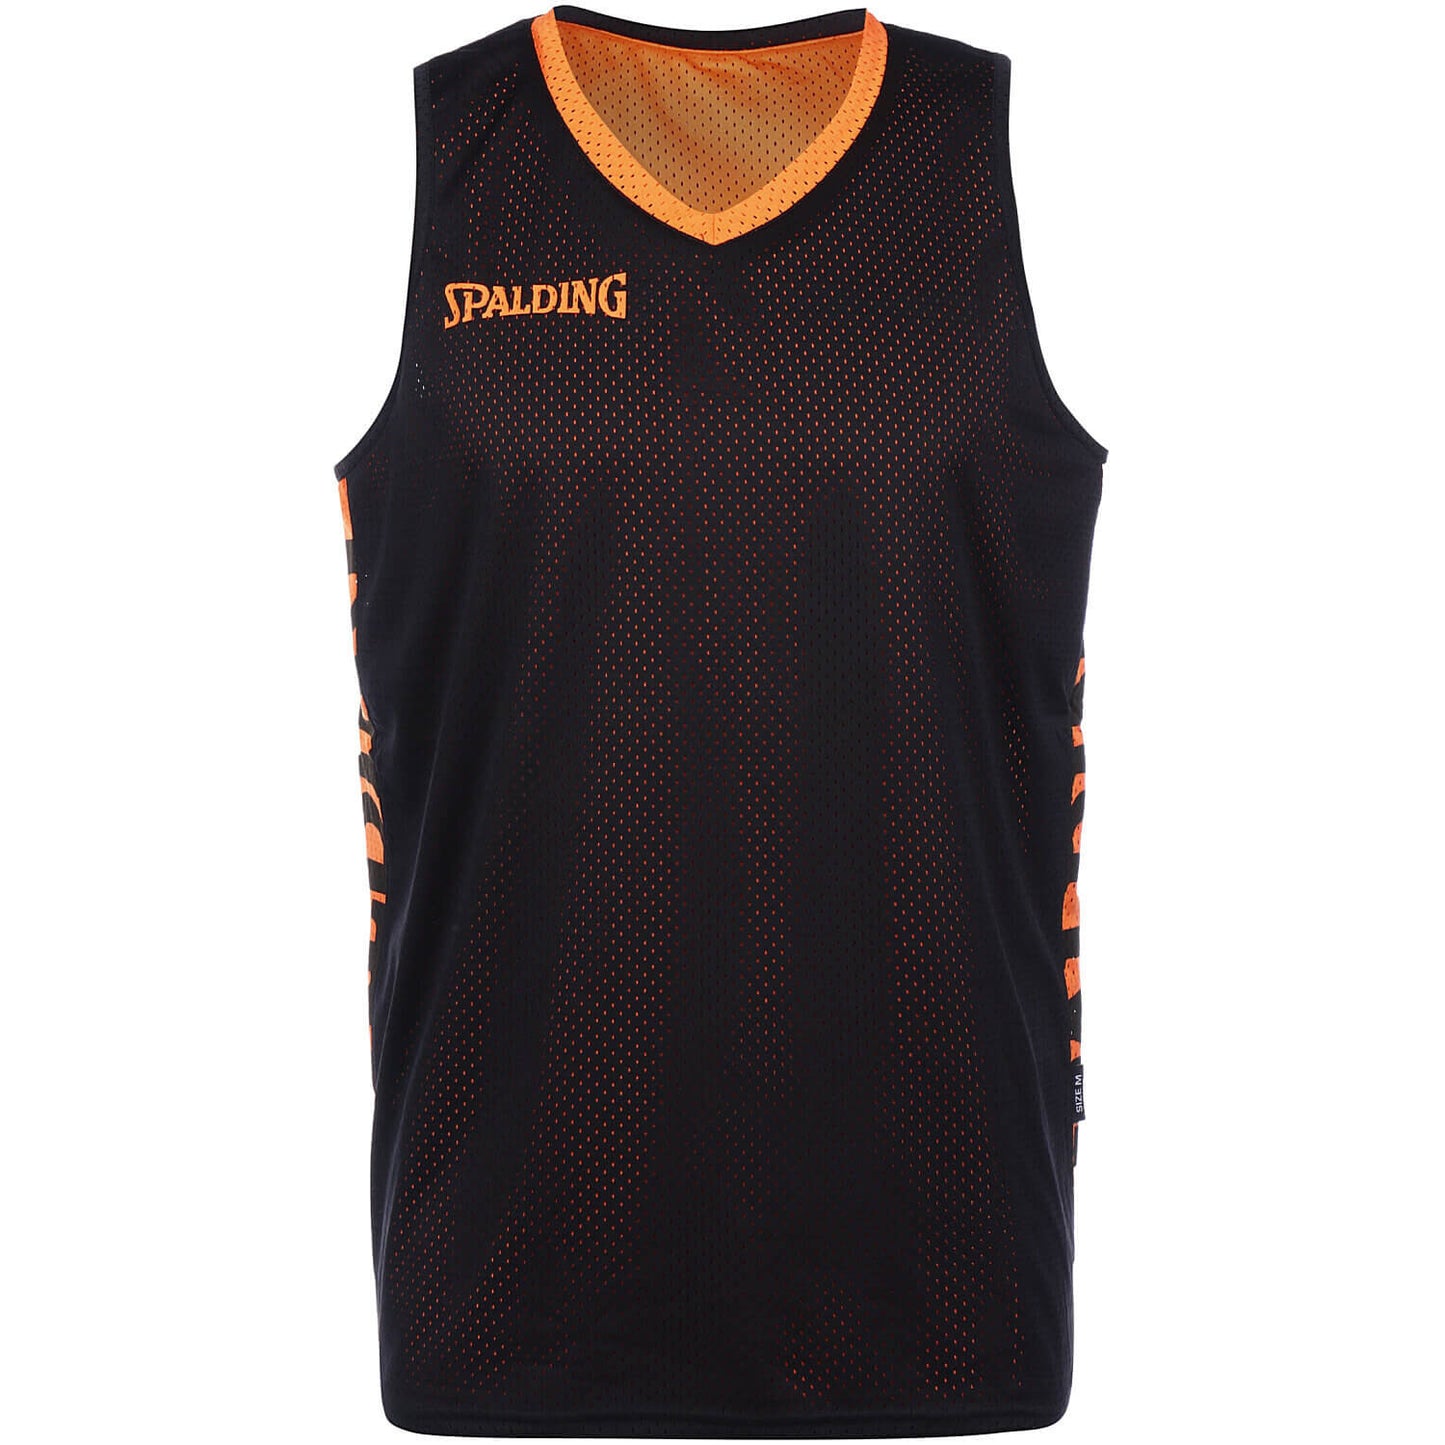 Spalding Essential Reversible Shirt Orange/Black